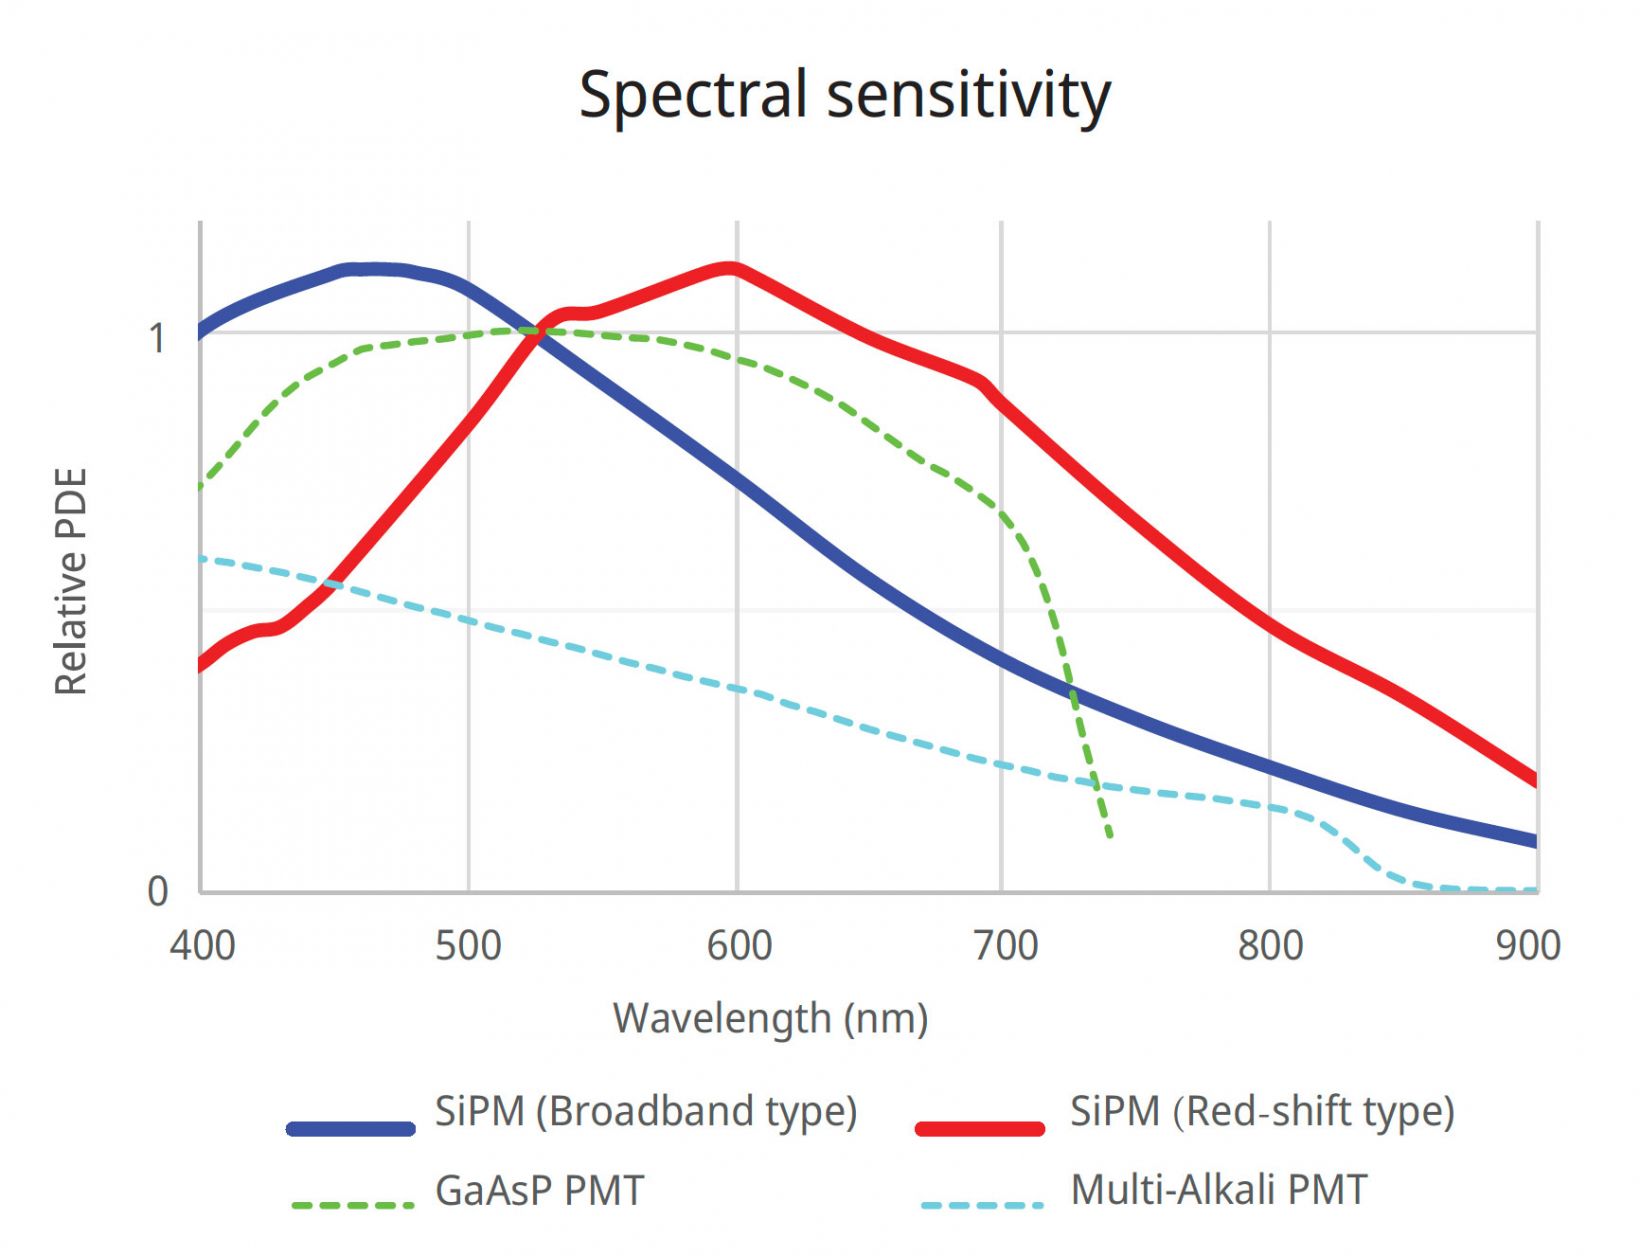 Figure 1: Spectral sensitivity